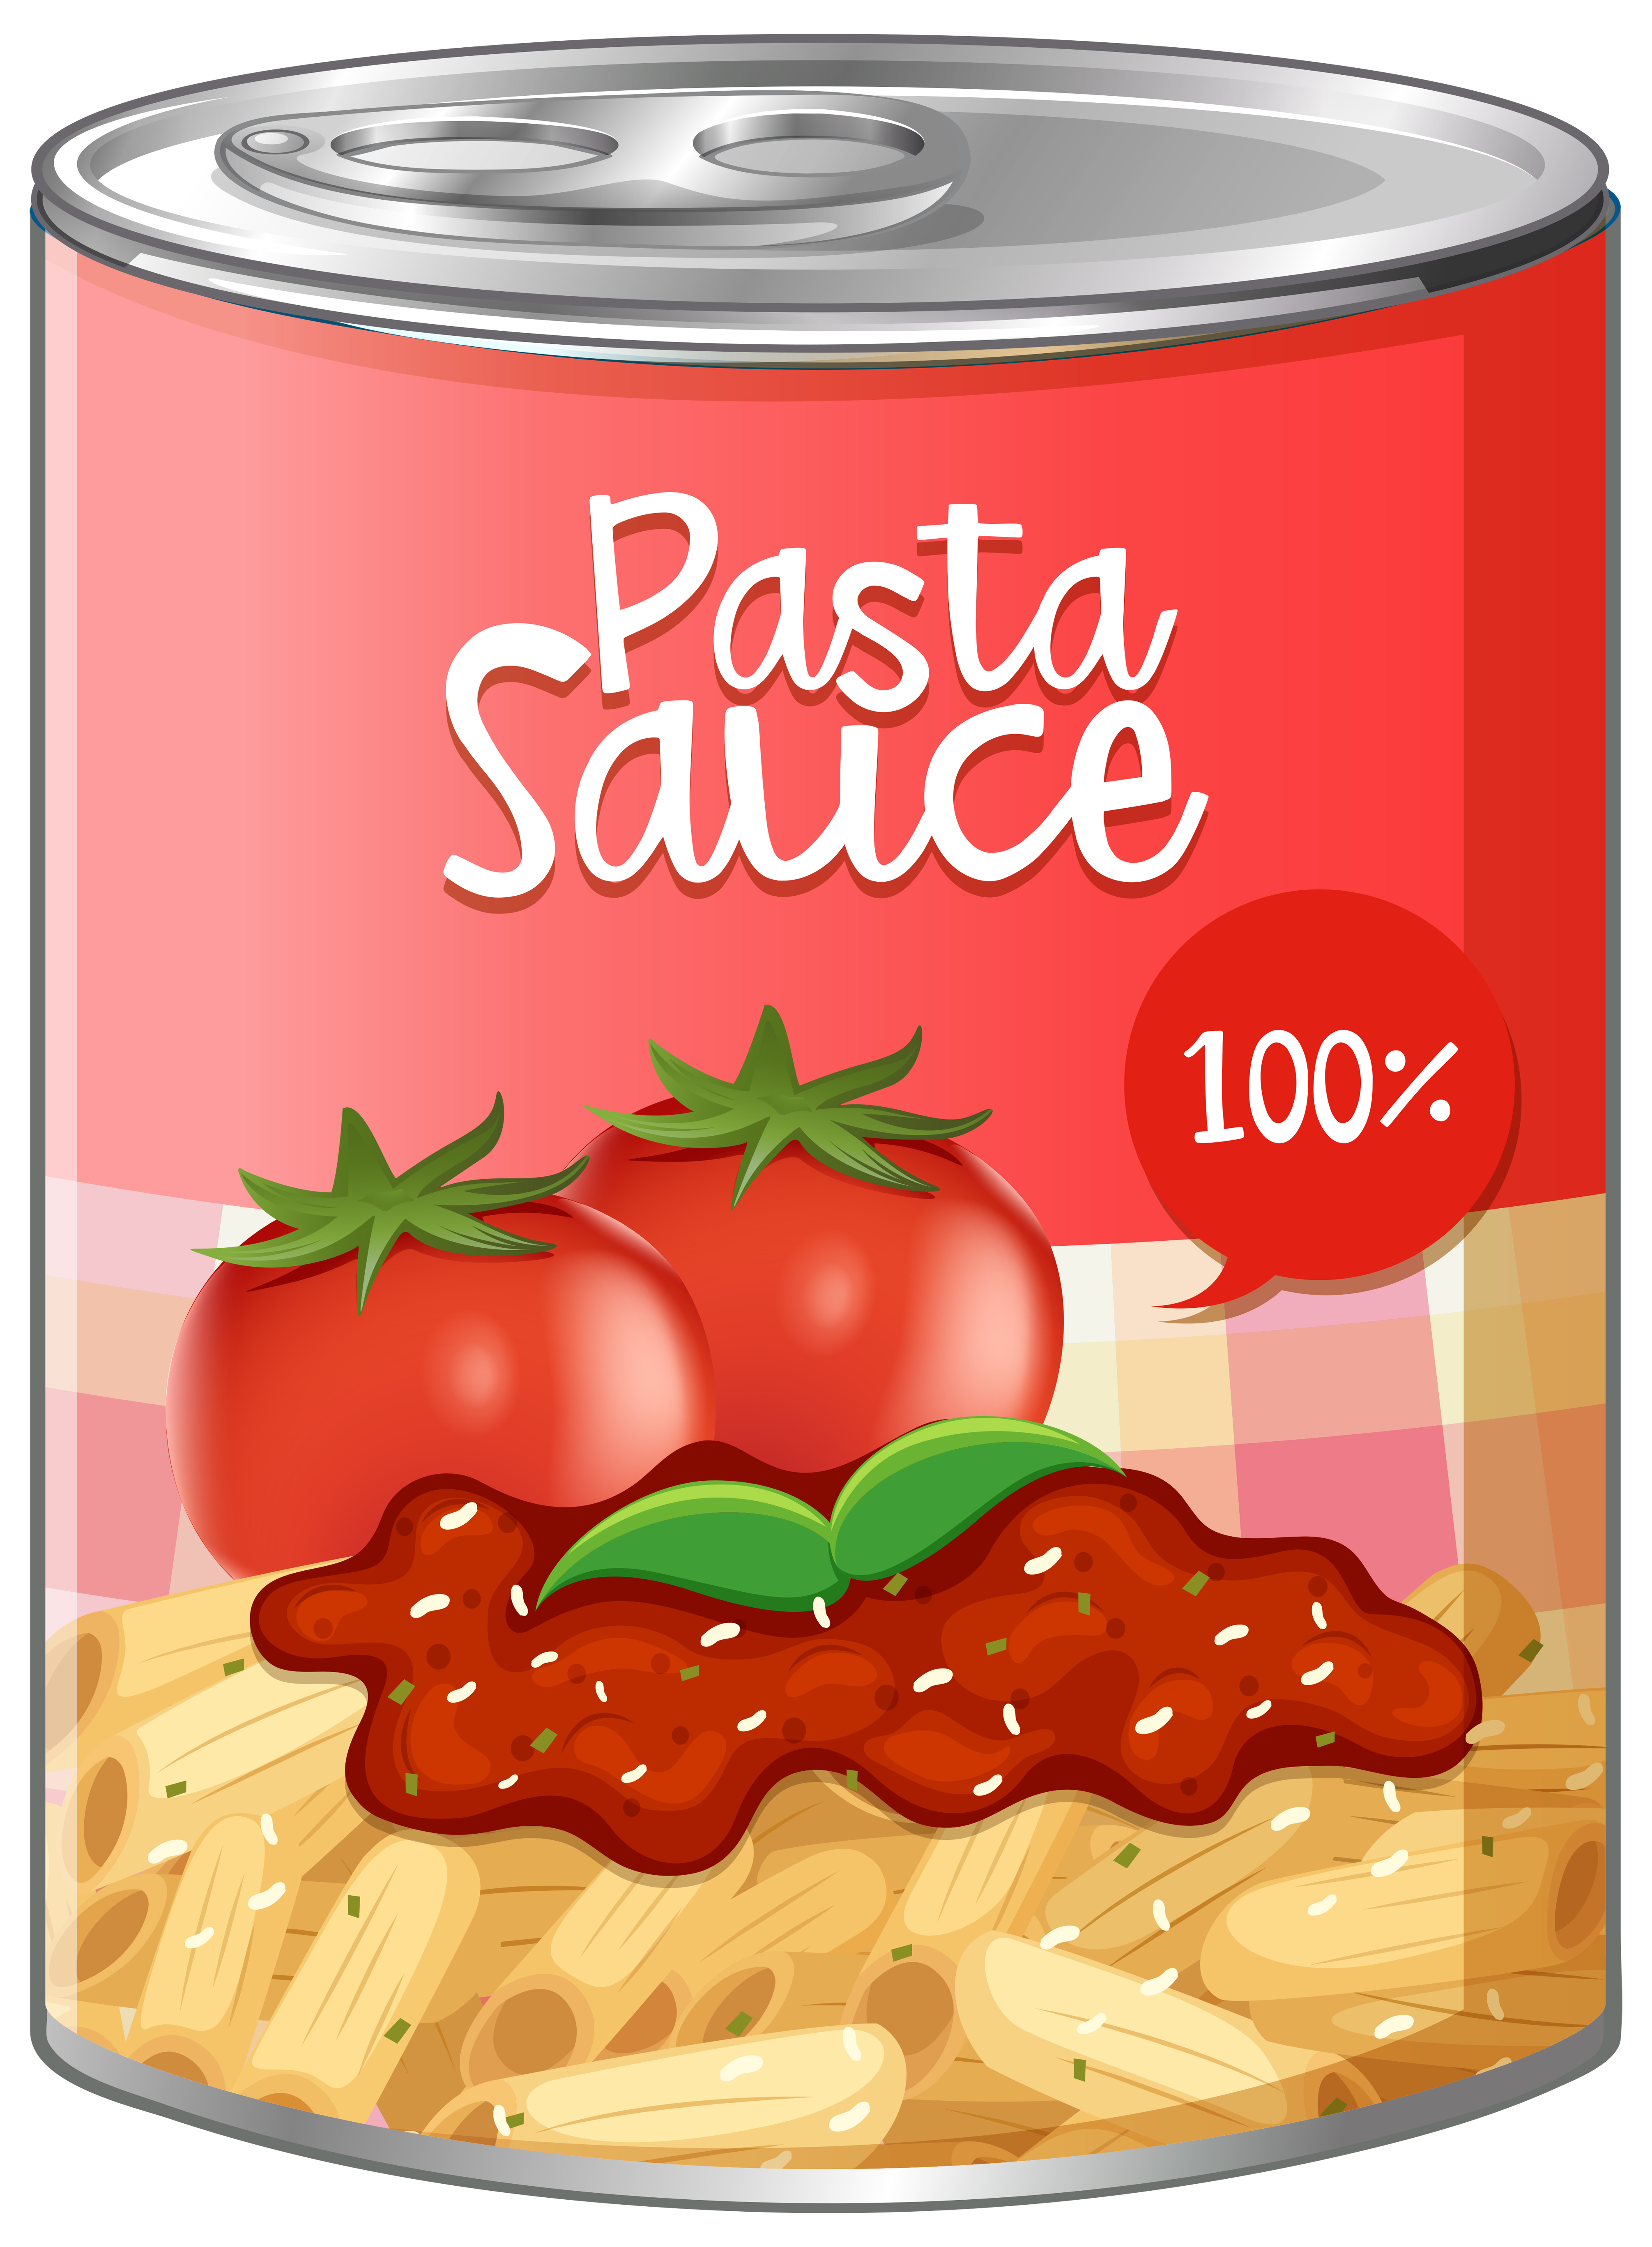 Pasta sauce in aluminum can - Download Free Vectors ...